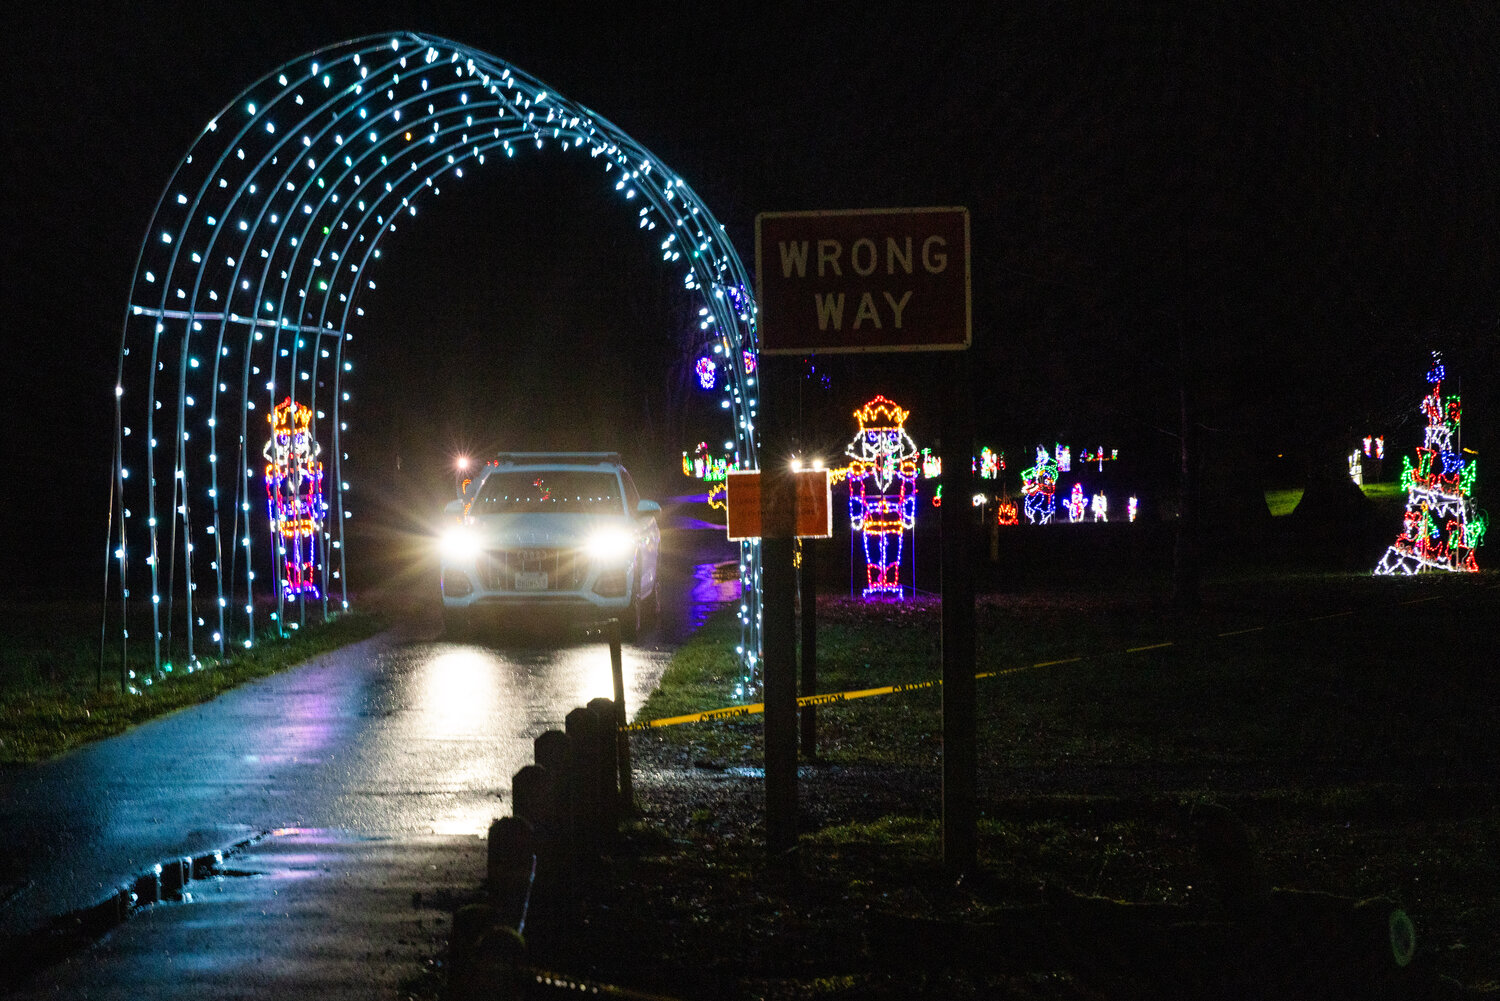 Vehicles drive through a light display at Borst Park in Centralia on Thursday, Dec. 7.